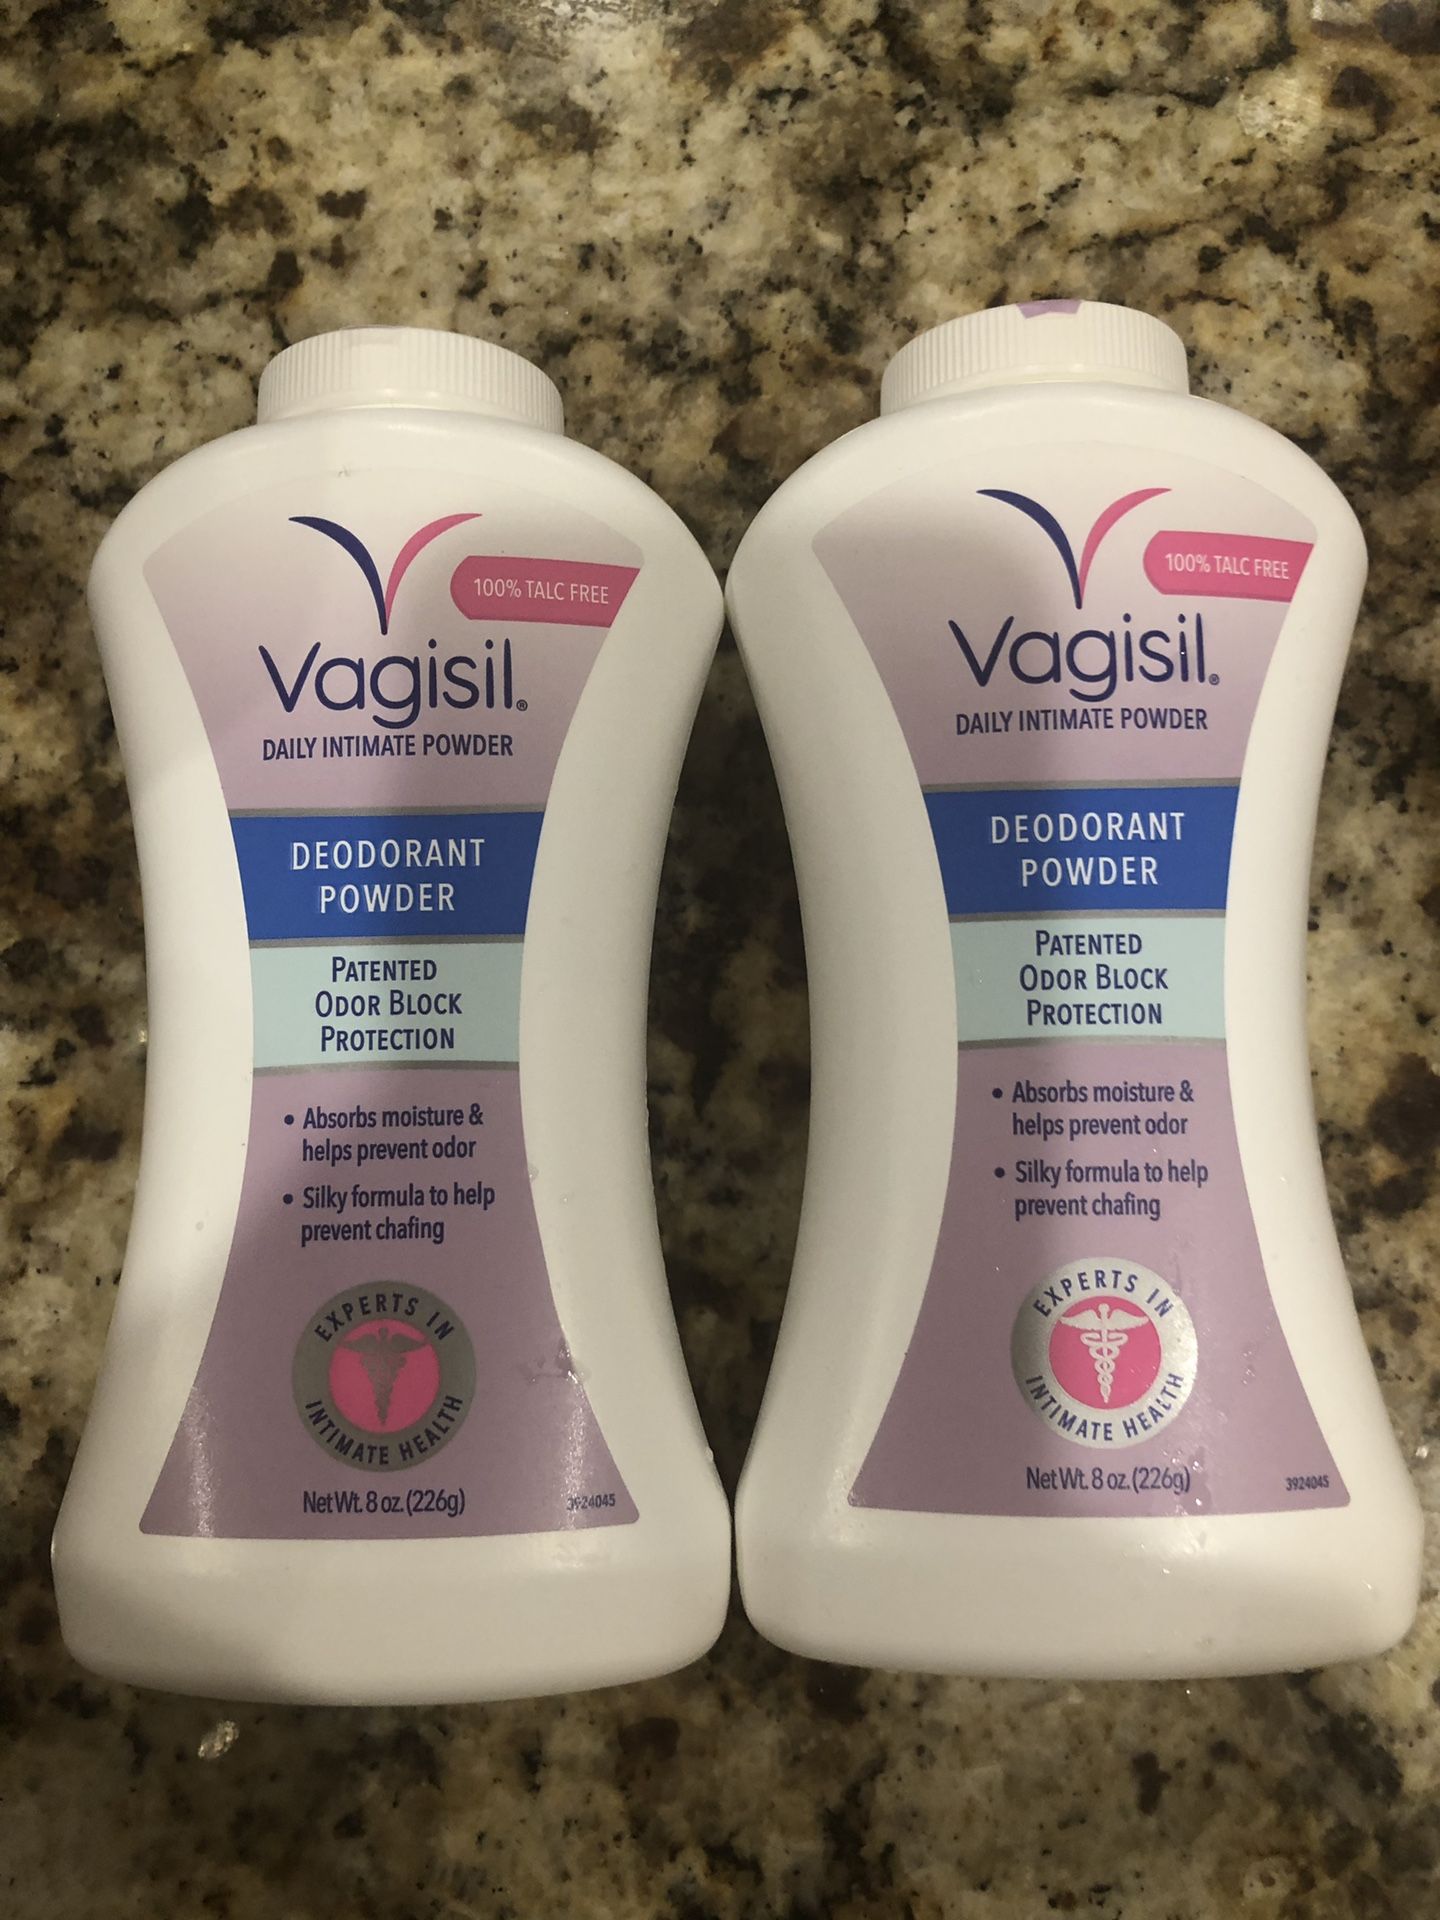 2 Vagisil deodorant powders